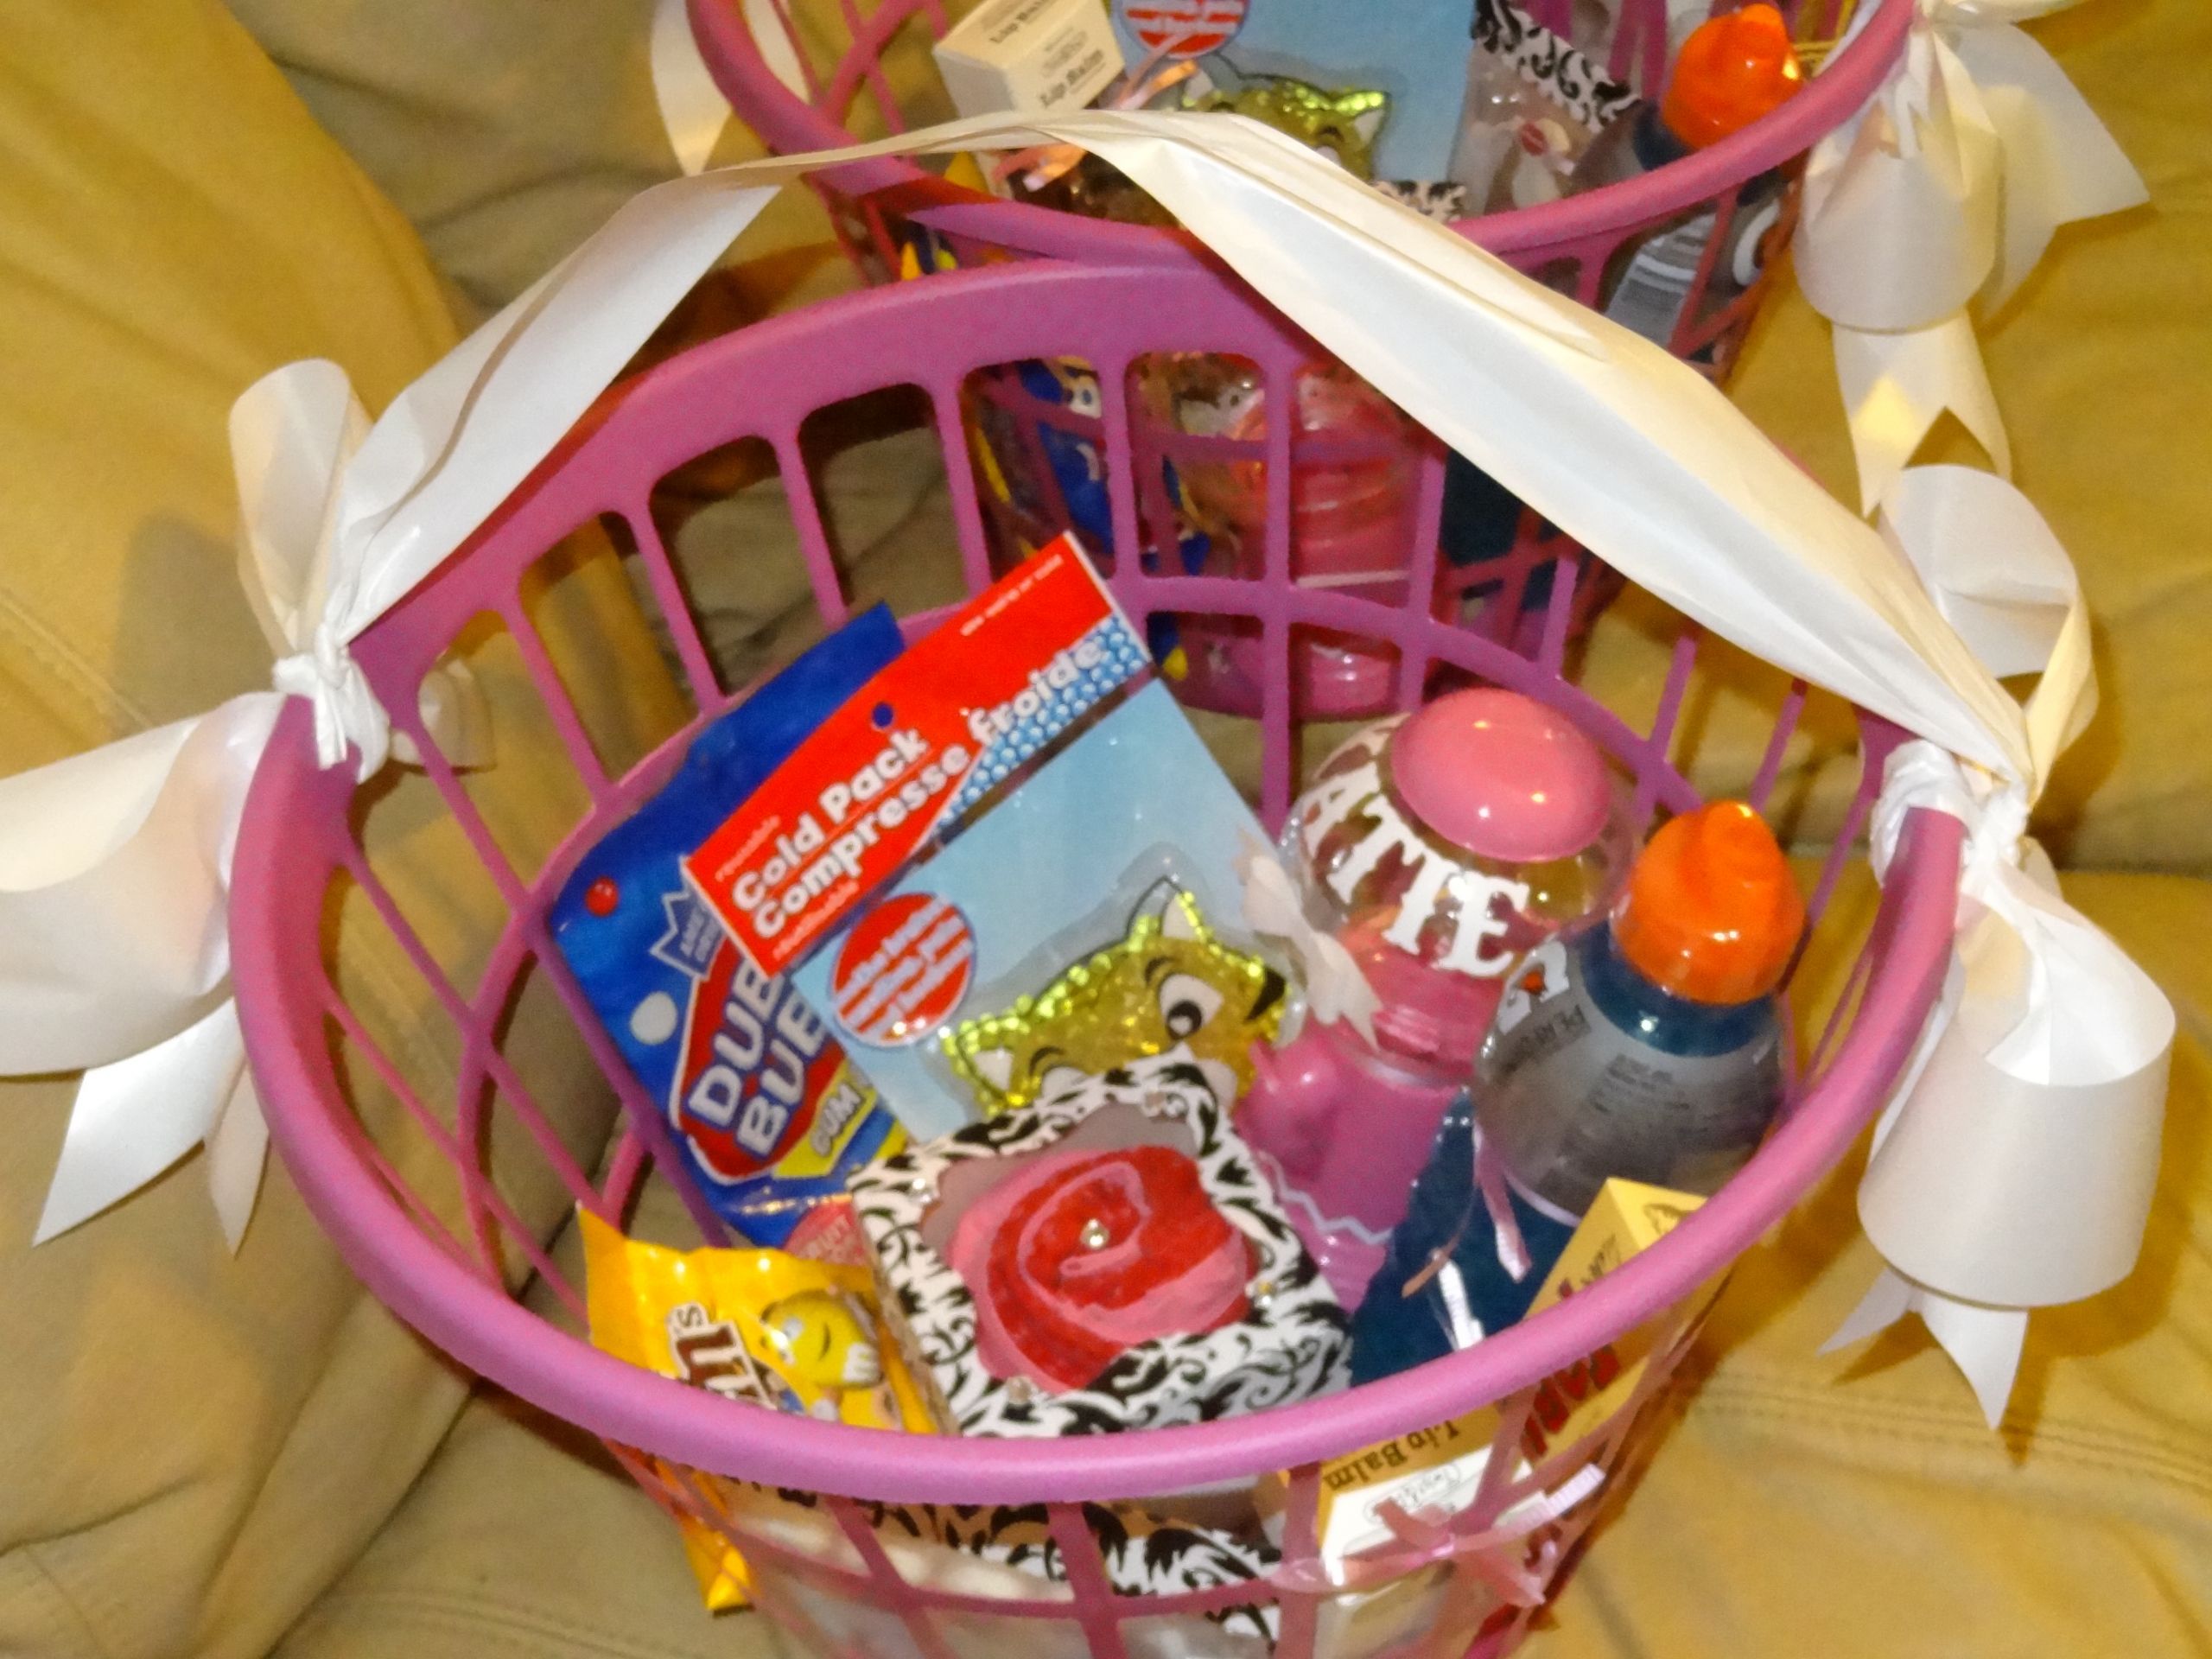 Cheerleading Gift Basket Ideas
 Cheer Group Gift